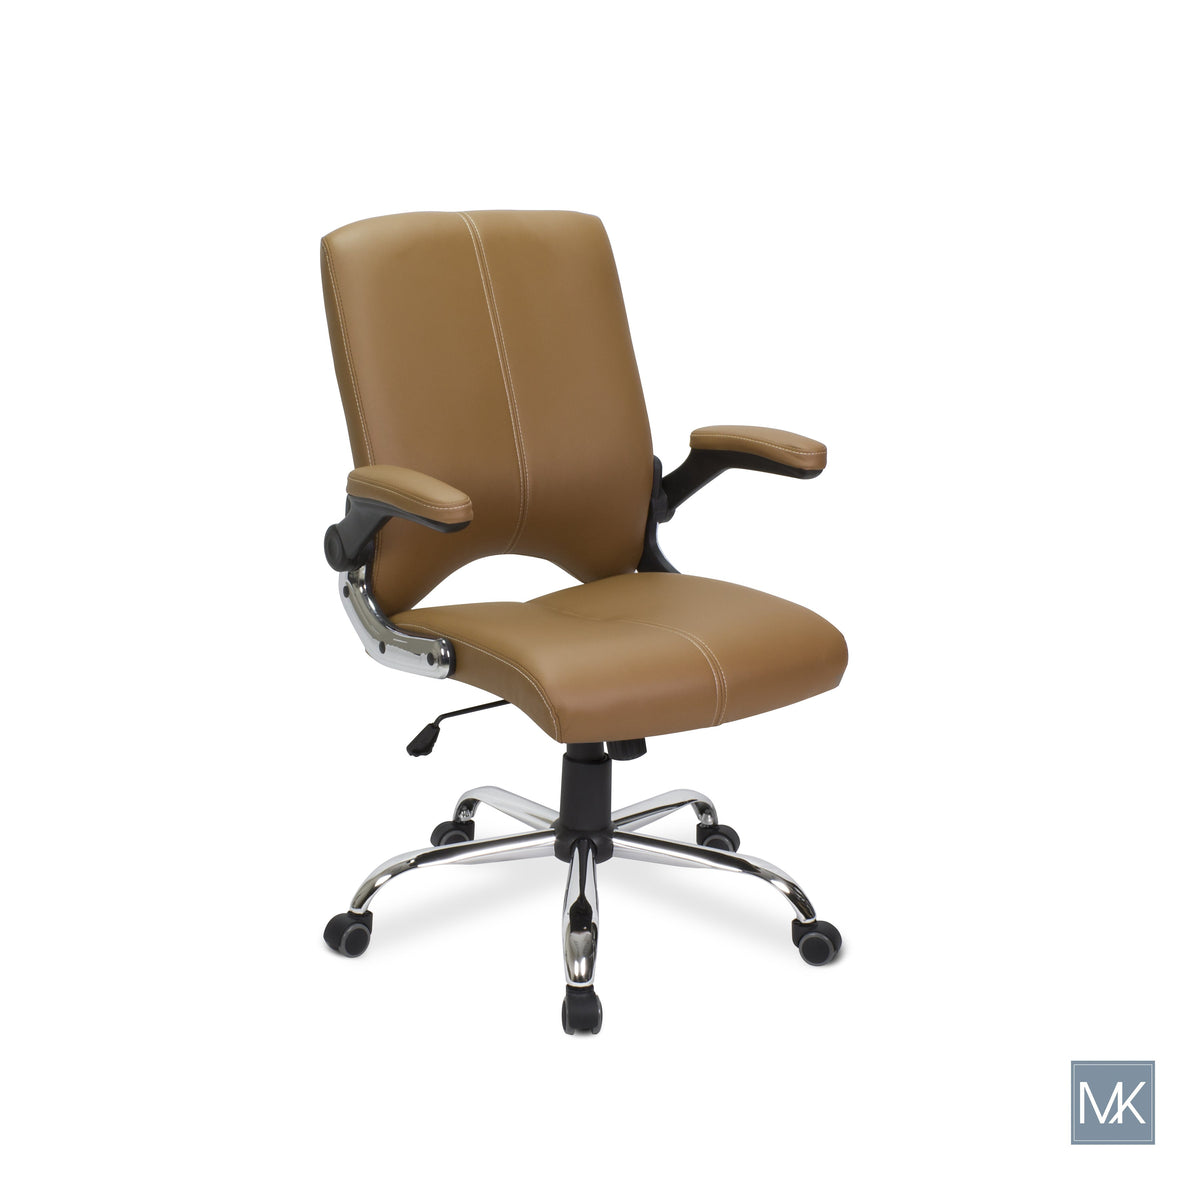 Eleventh image of Mayakoba Versa Customer Chair by Superb Nail Supply